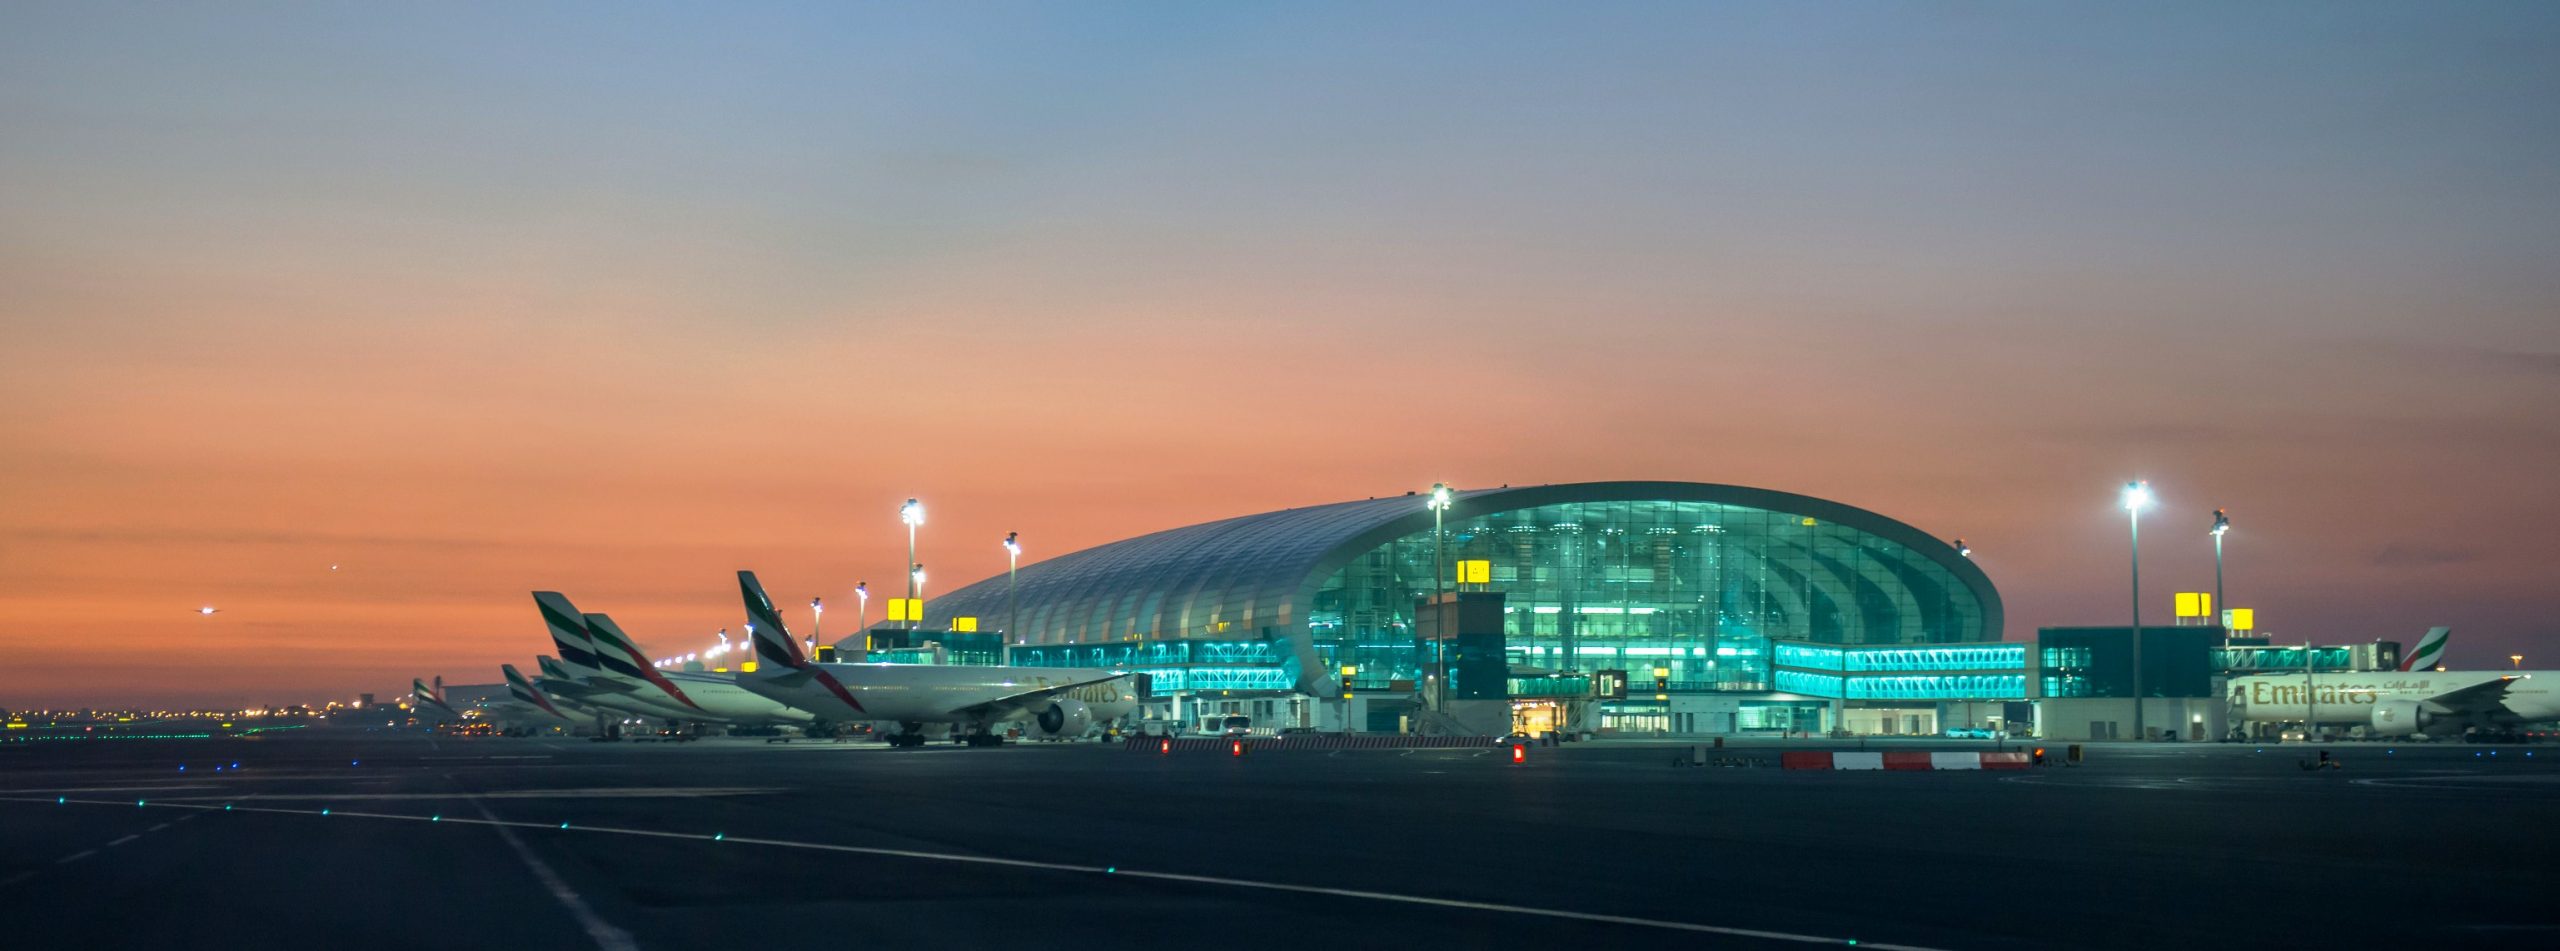 مطار دبى الدولى - dubai airport (3)